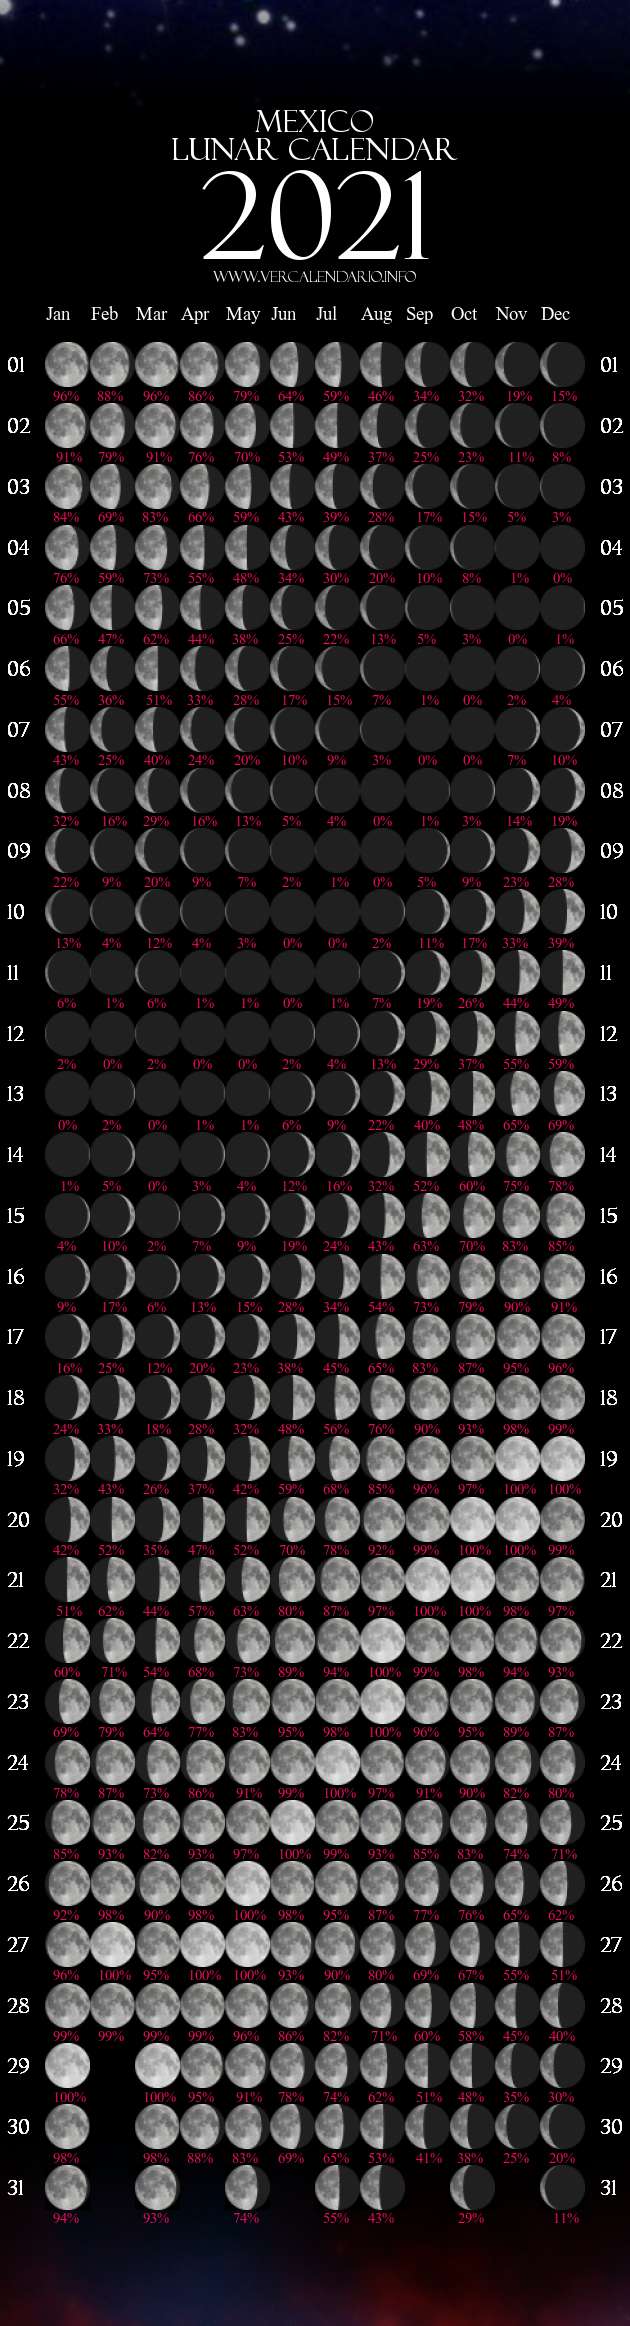 2021 lunar phase calendar Lunar Calendar 2021 Mexico 2021 lunar phase calendar